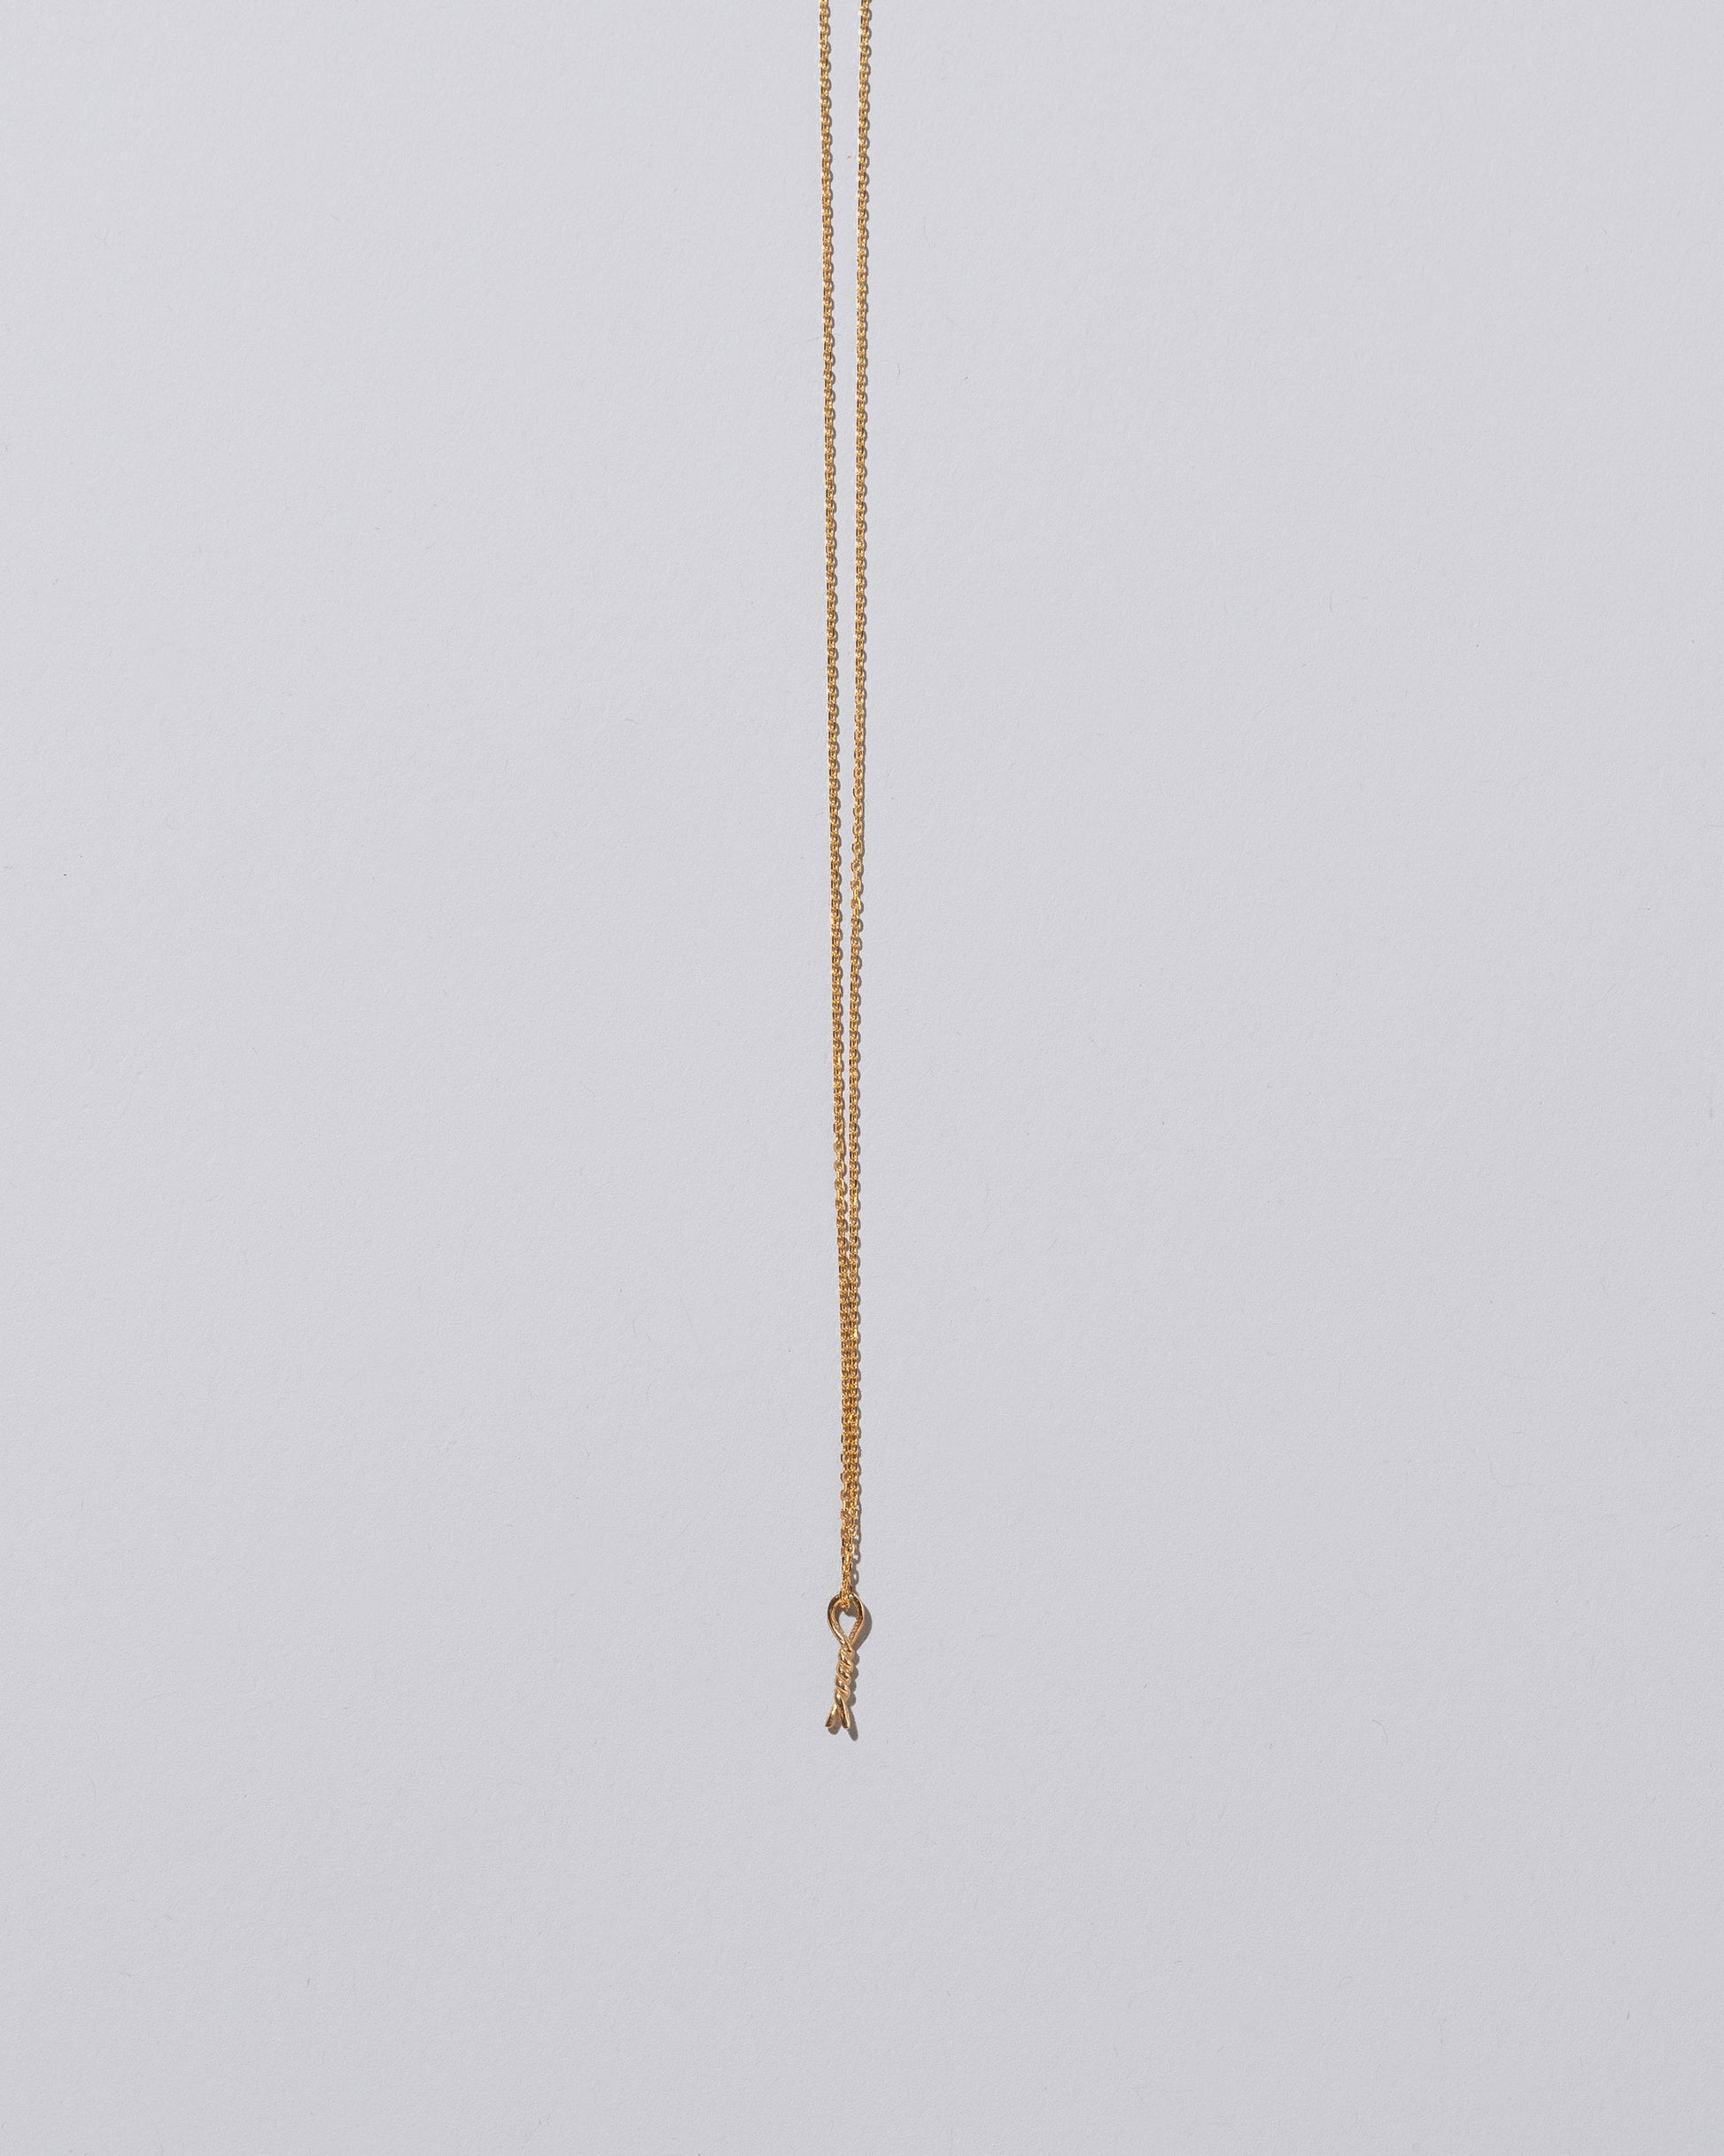 Twist Talisman Pendant Necklace on light color background.